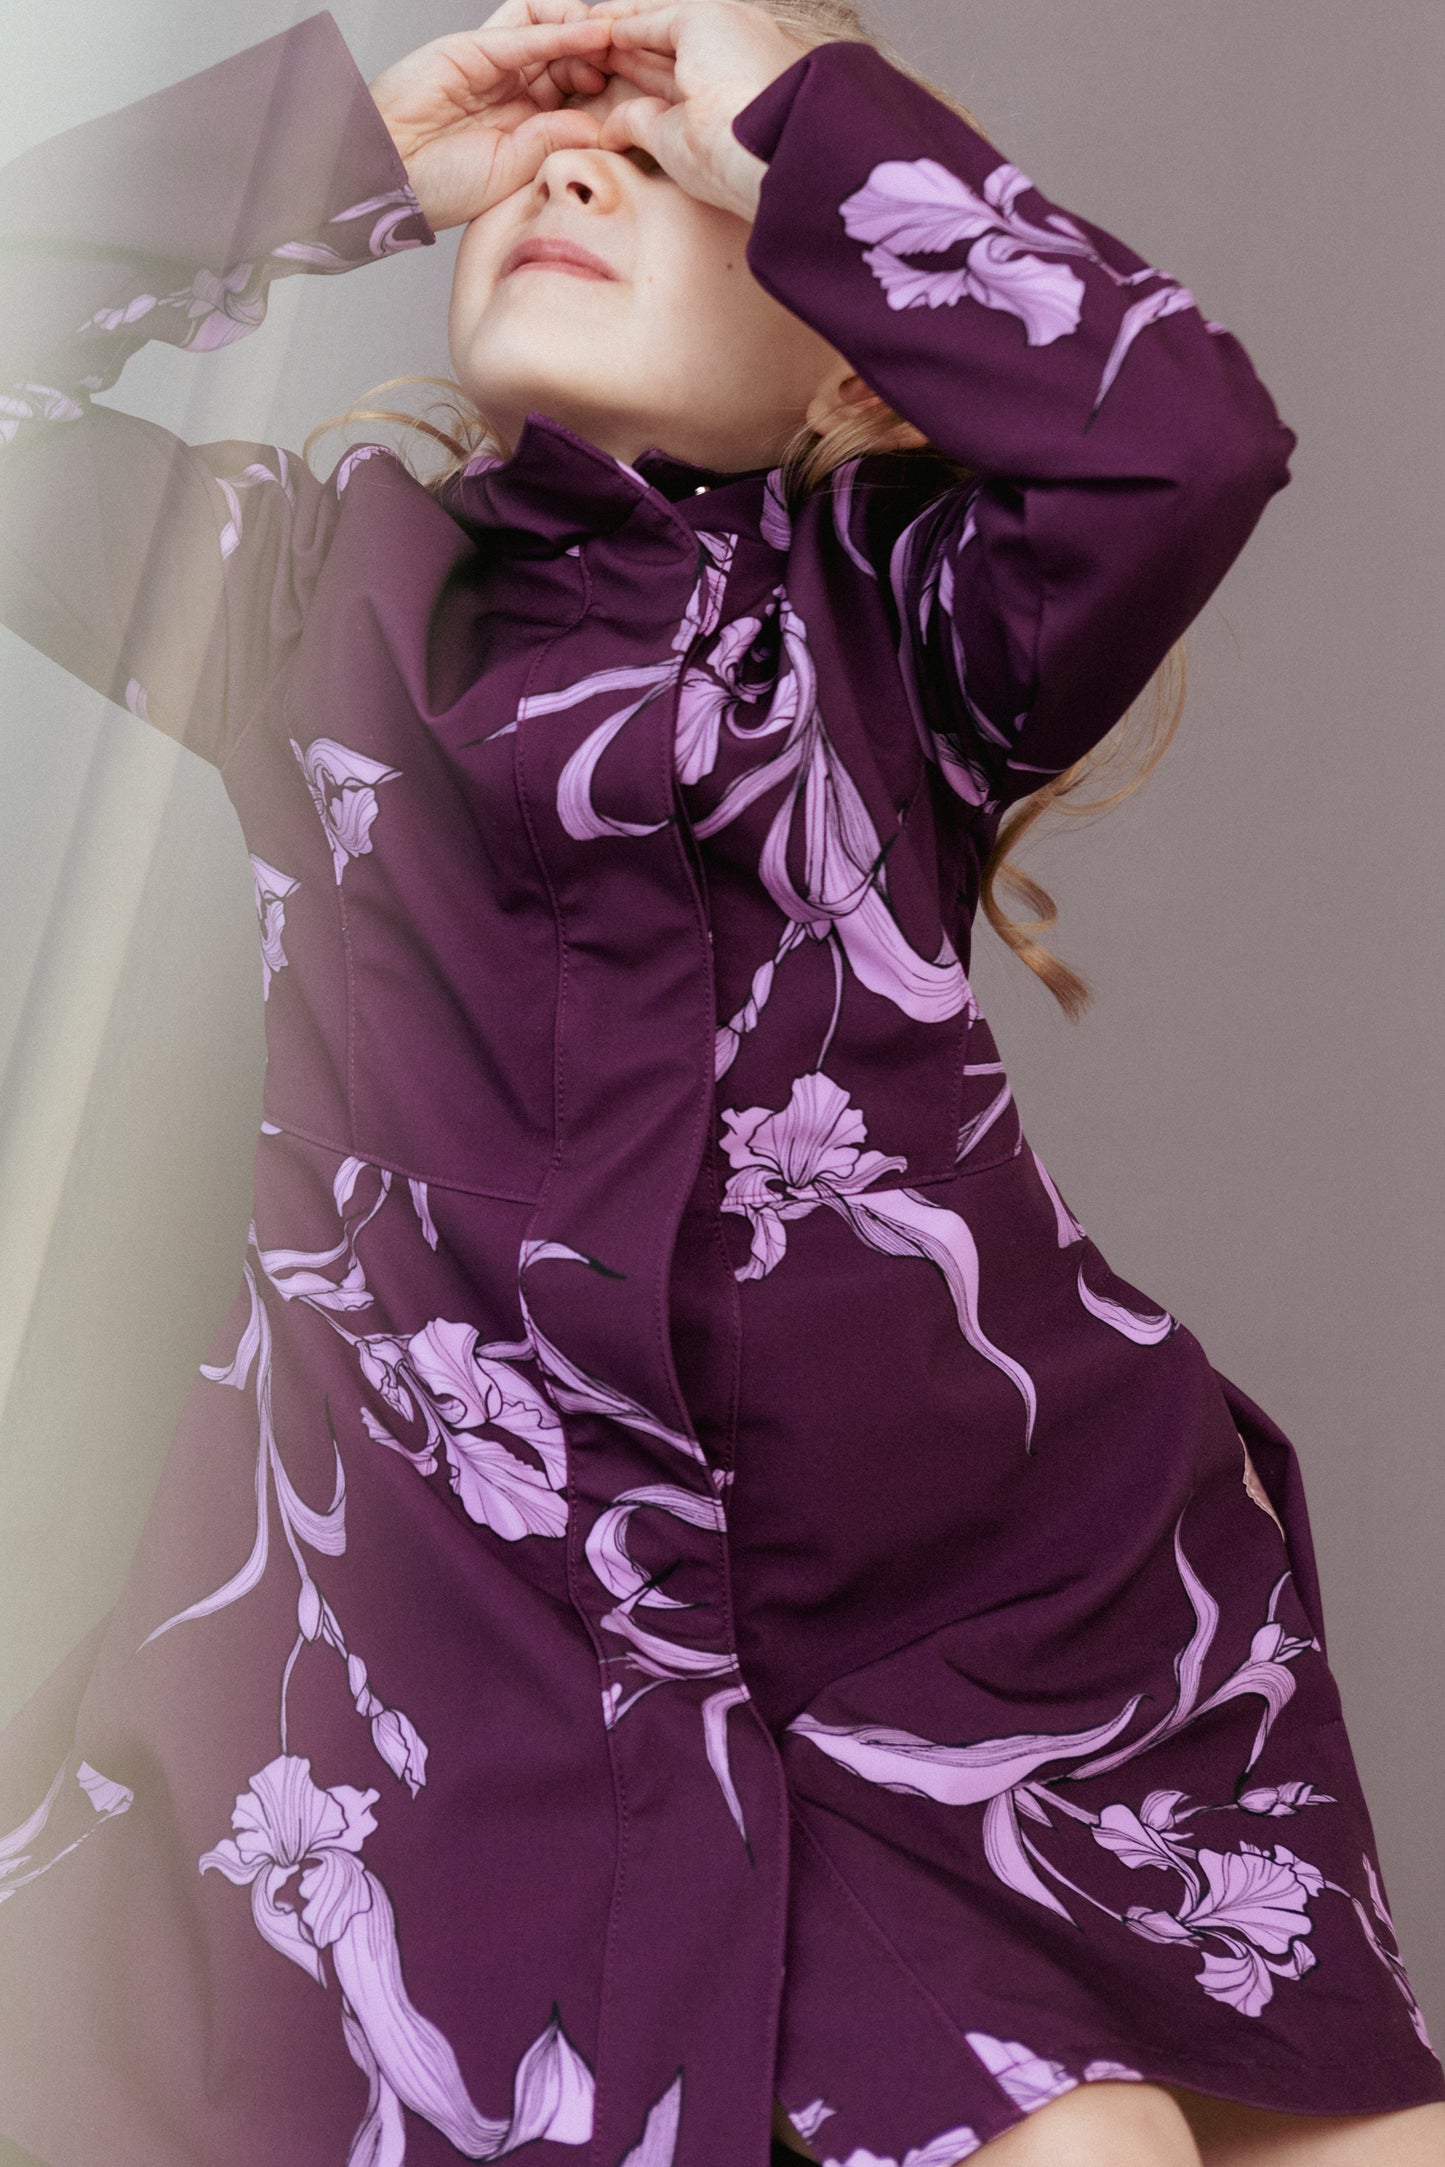 Waterproof Purple Coat for Girls with hood and light purple iris flower print